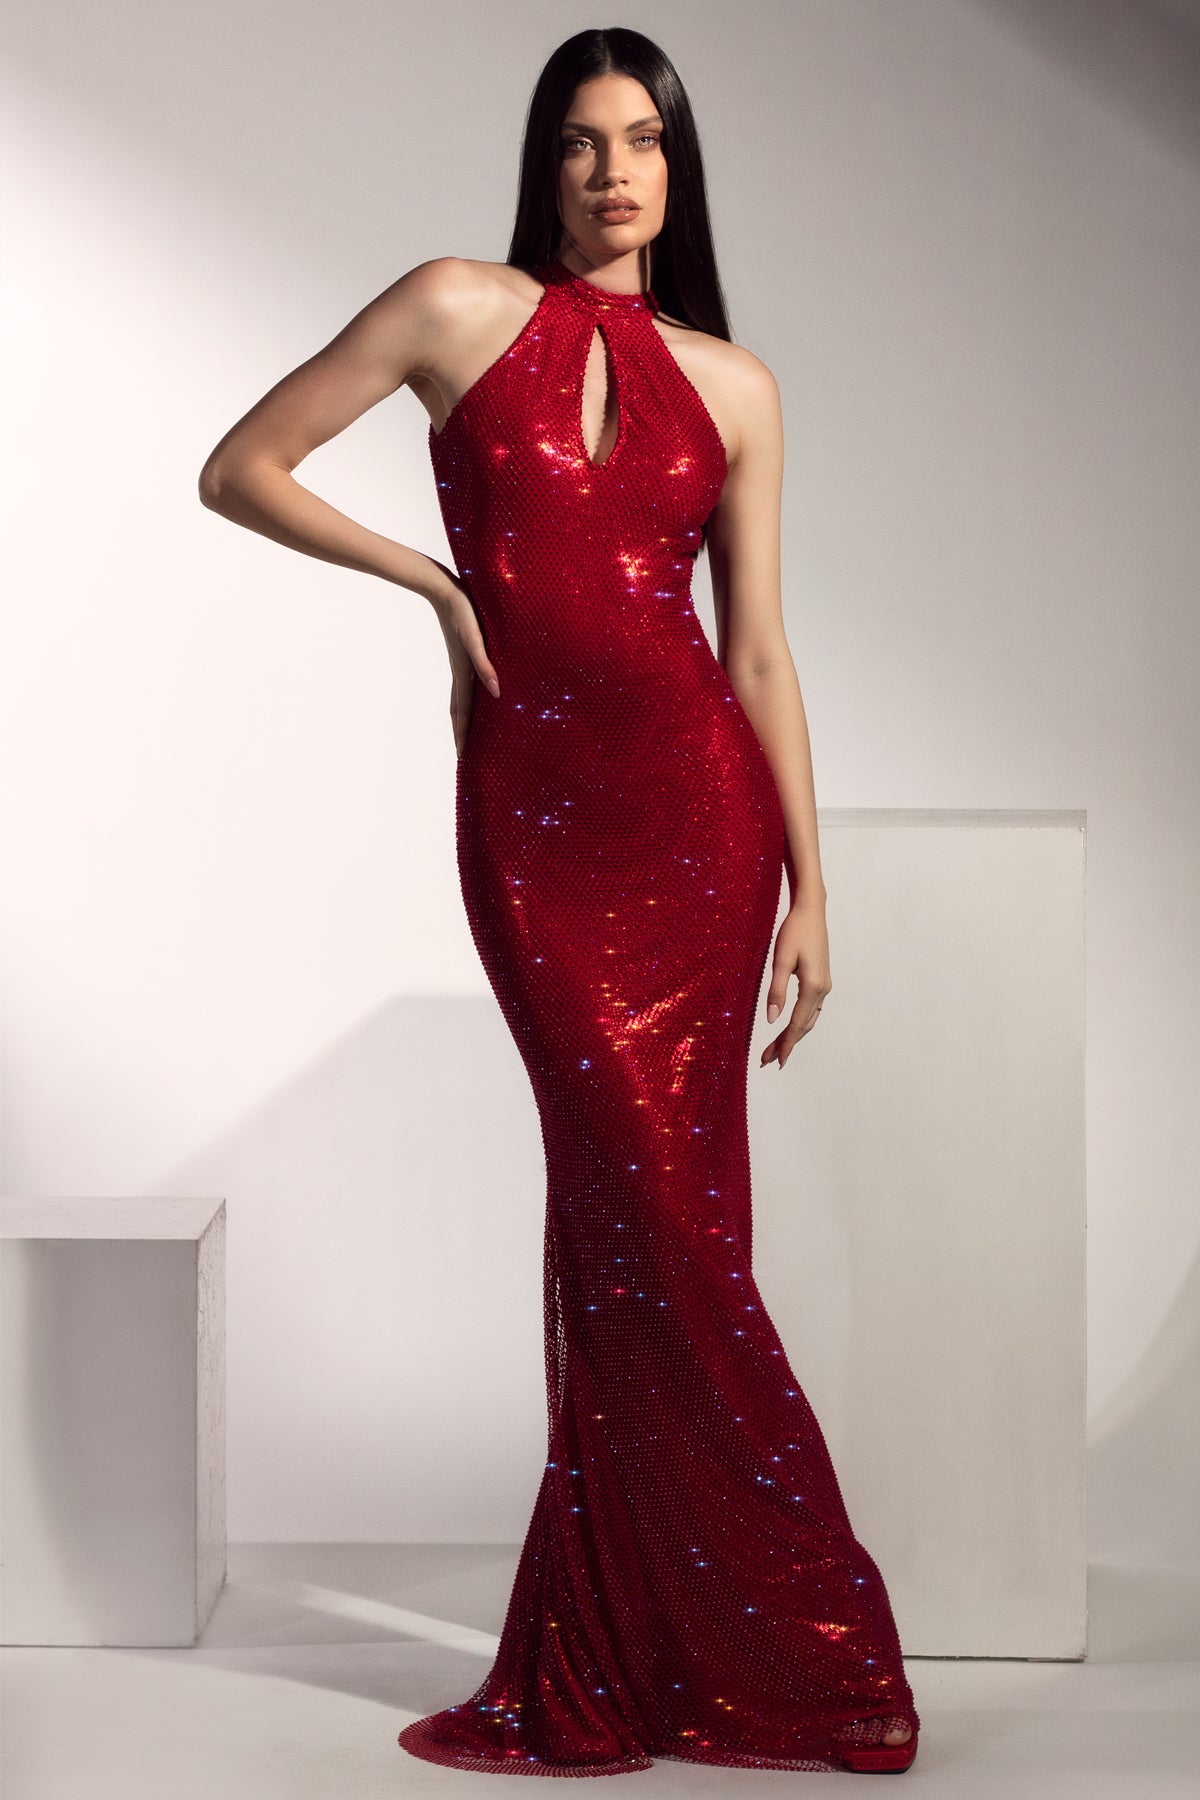 Baccio by Altamirano Maira Crystal Mesh Red Long Dress Xs